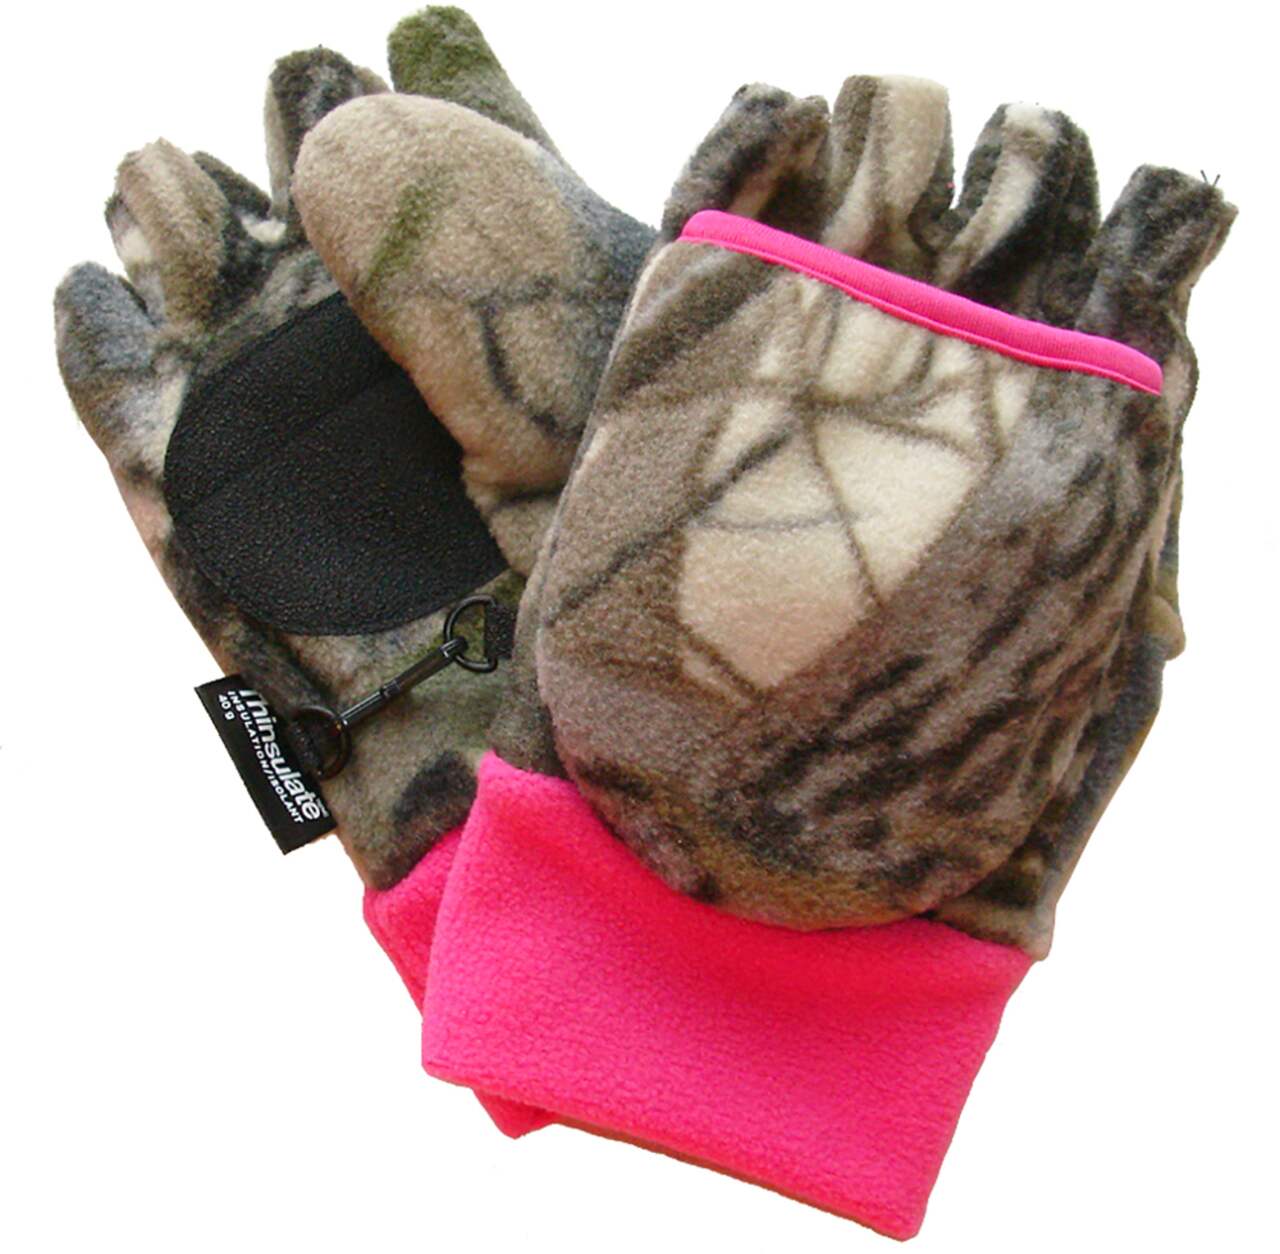 Hot Shot Women's Fleece Hunting Mittens/Gloves with Non-Slip Grip